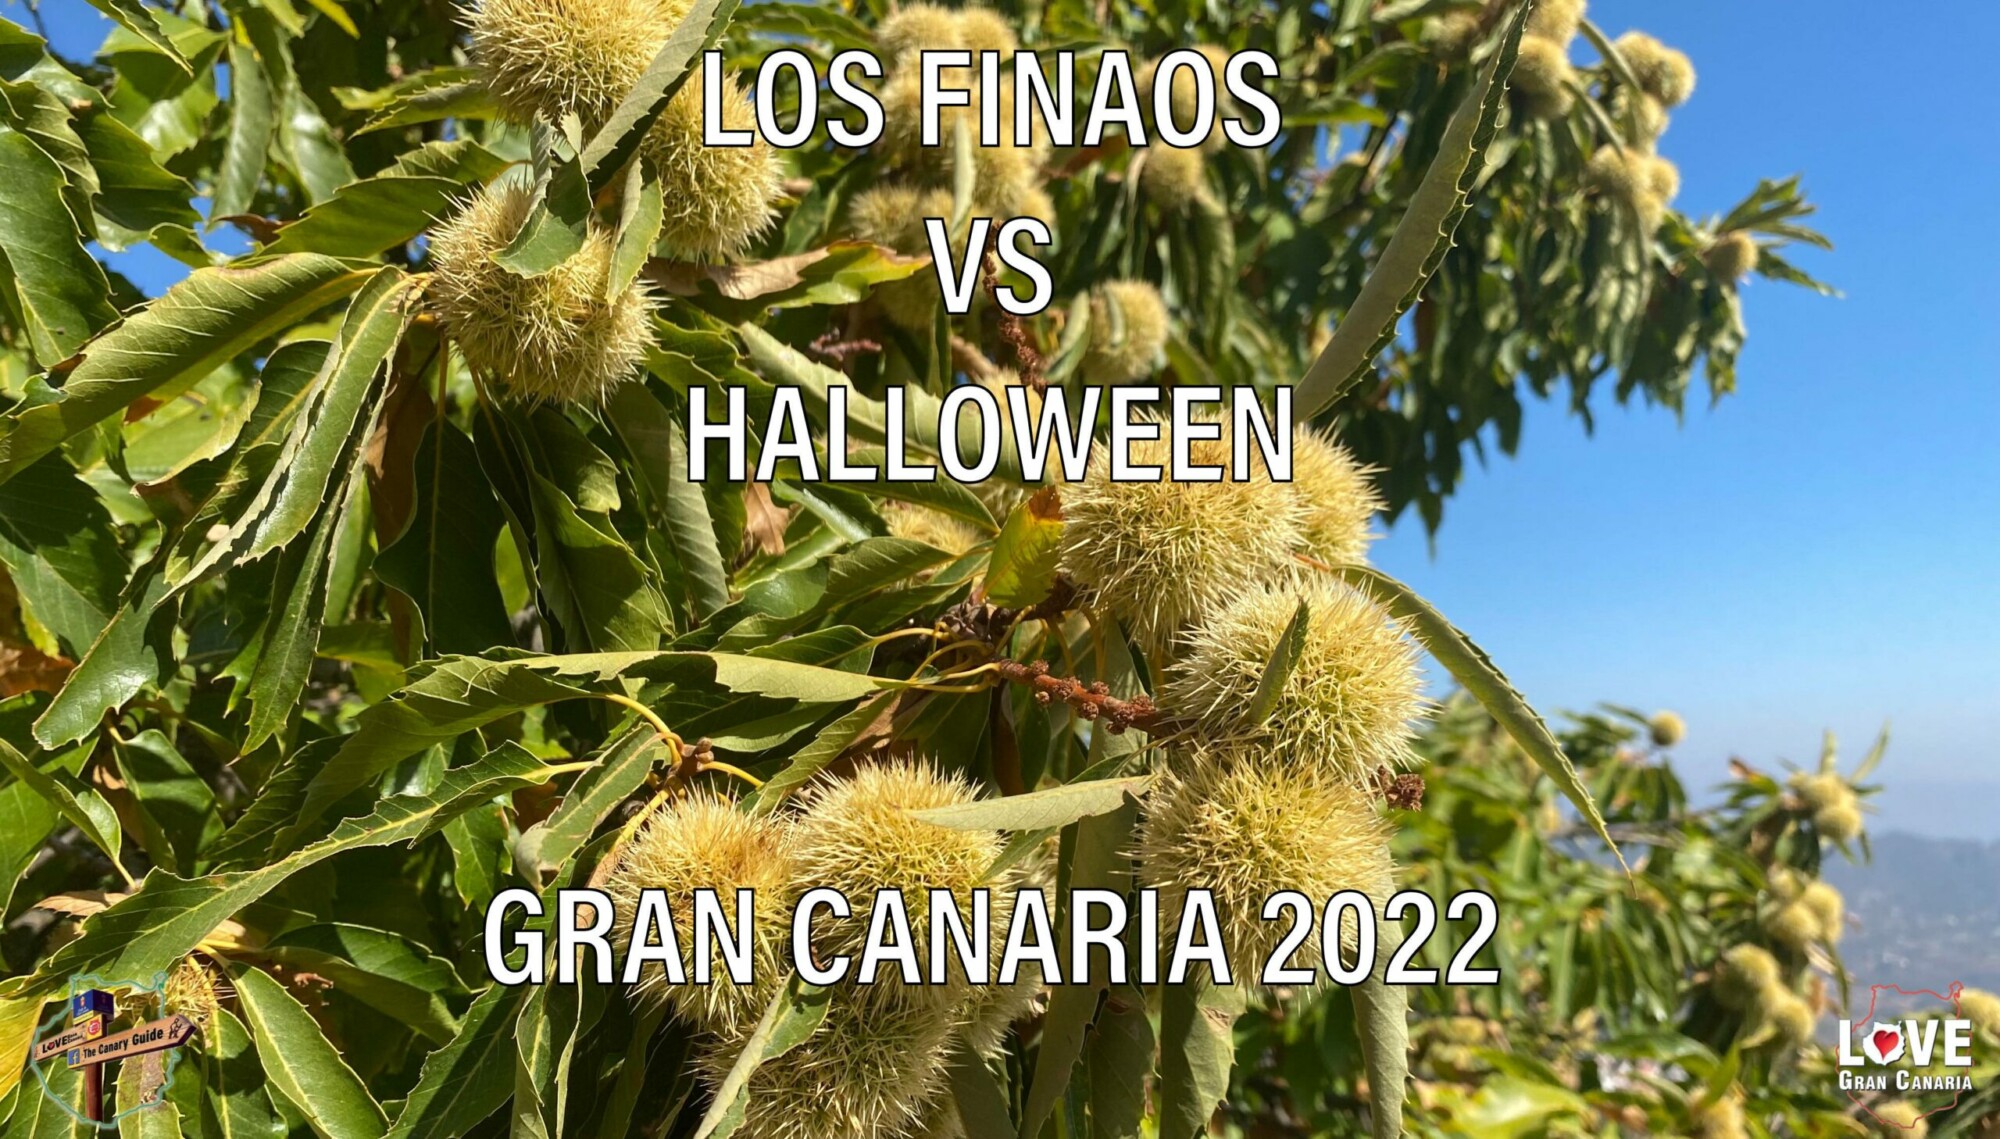 The Canary Guide: Noche de Finaos vs. Halloween on Gran Canaria 2022